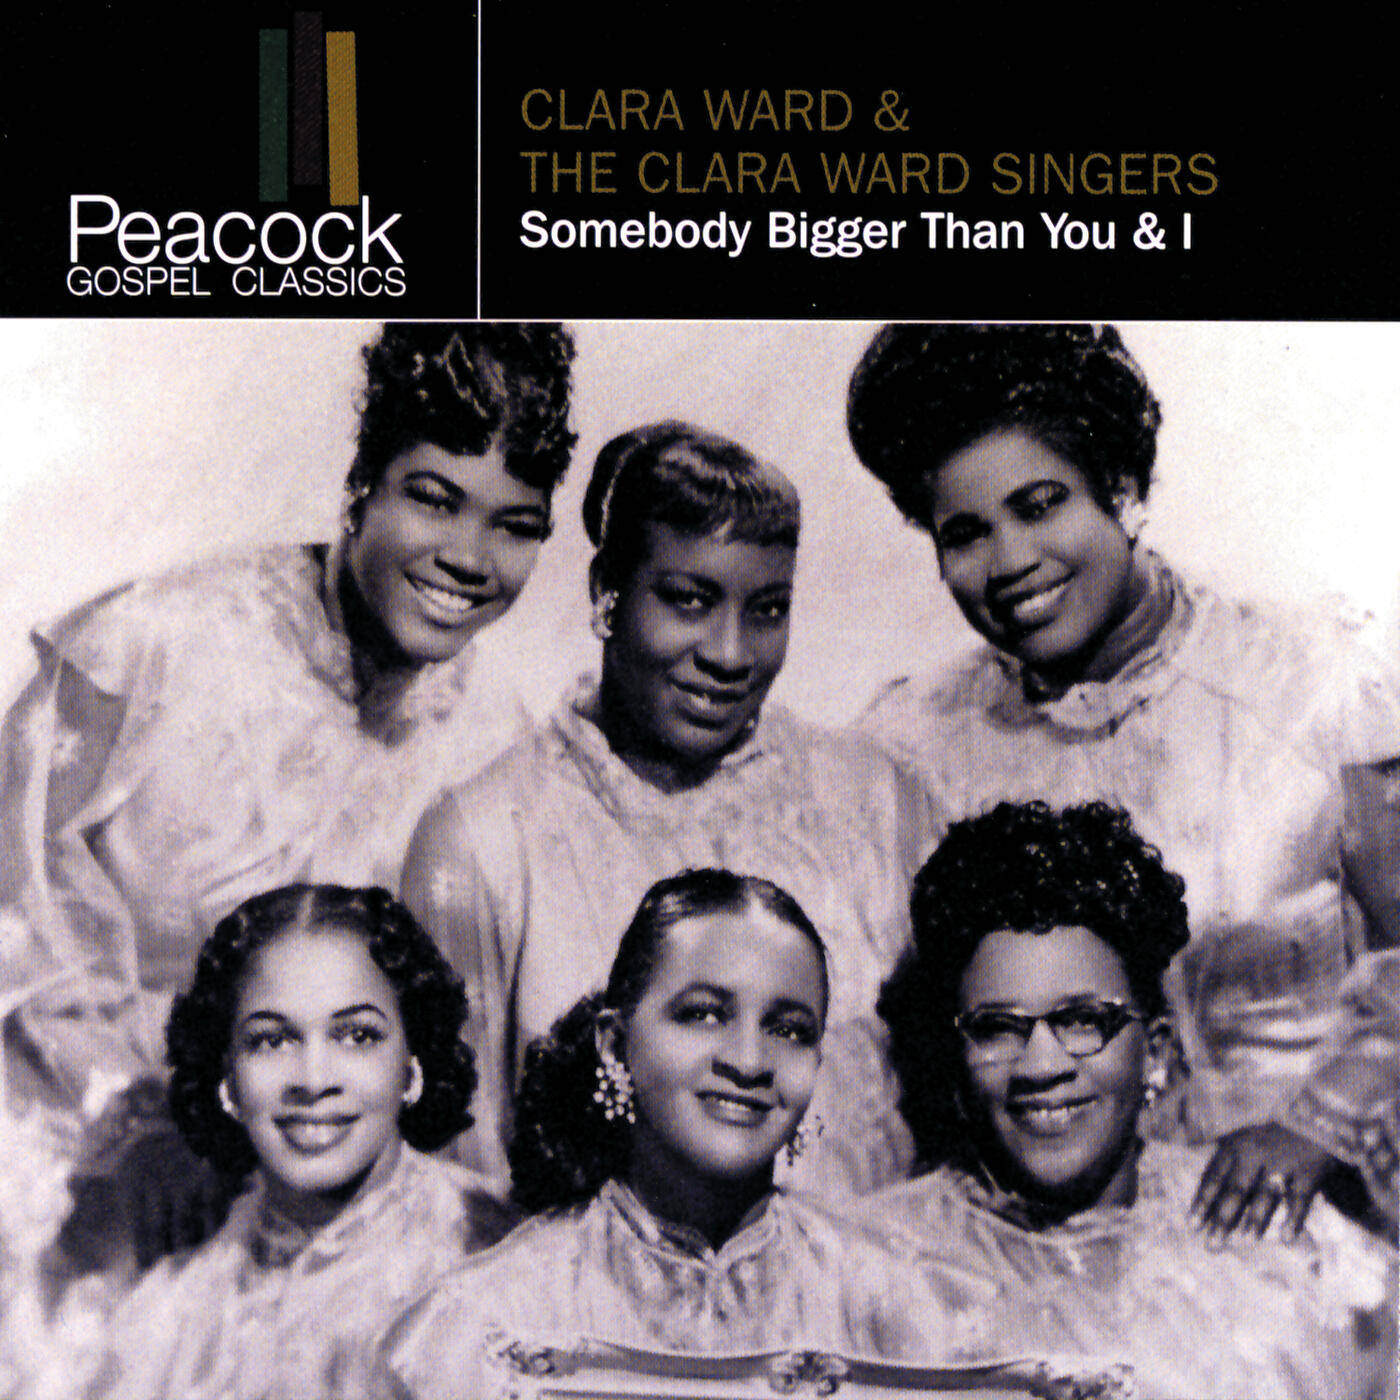 Claraward Singer Peacock Gospel Classics - Clara Ward Singer Peacock Gospel Classics Wallpaper